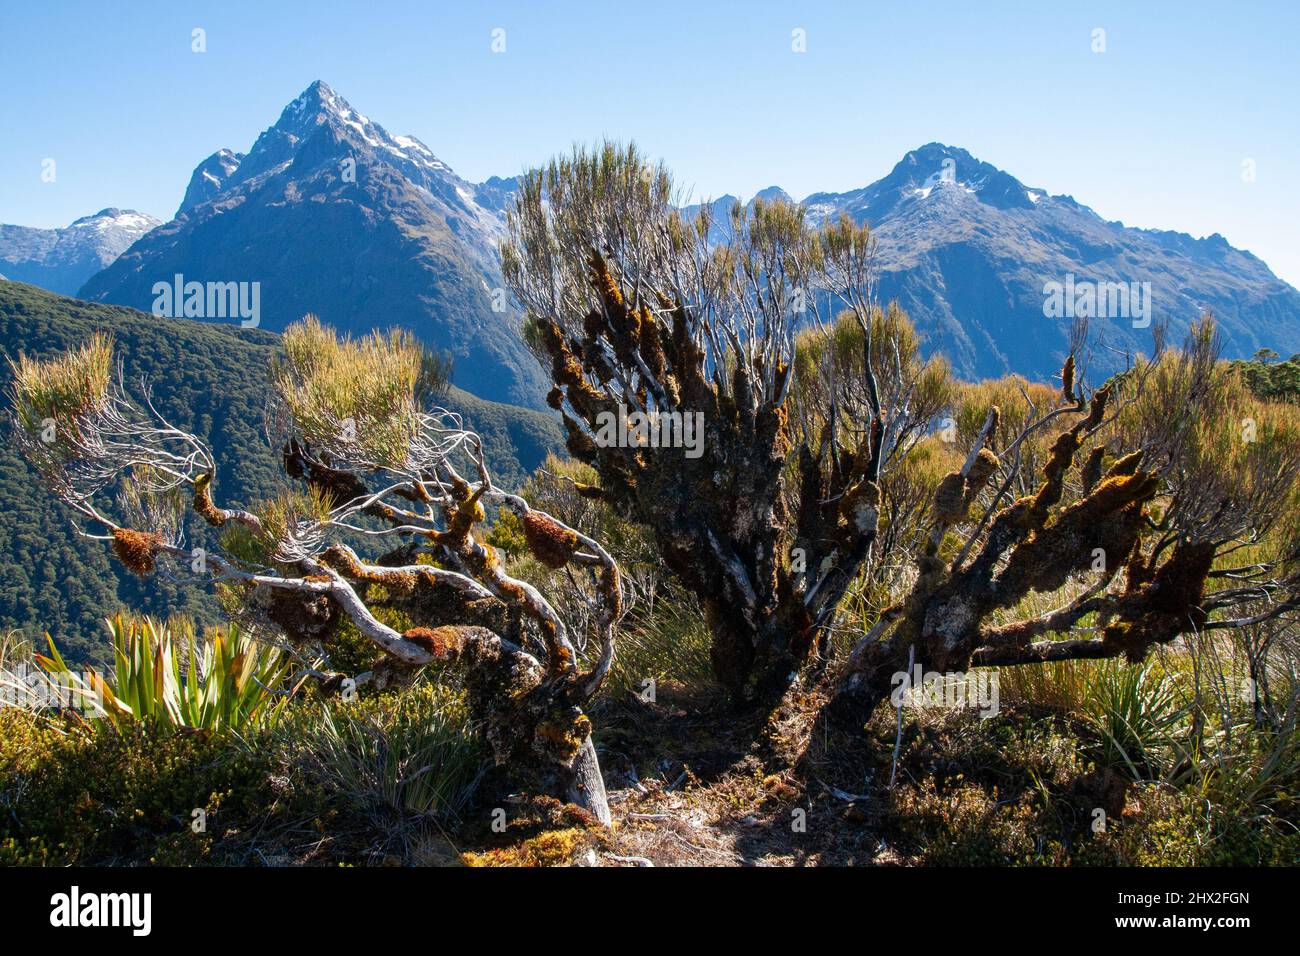 Dracophyllum longifolium, Inaka o Dragon Leaf albero di erba pianta alpina nativo della Nuova Zelanda, Monti Darran in backround, Key Summit Foto Stock